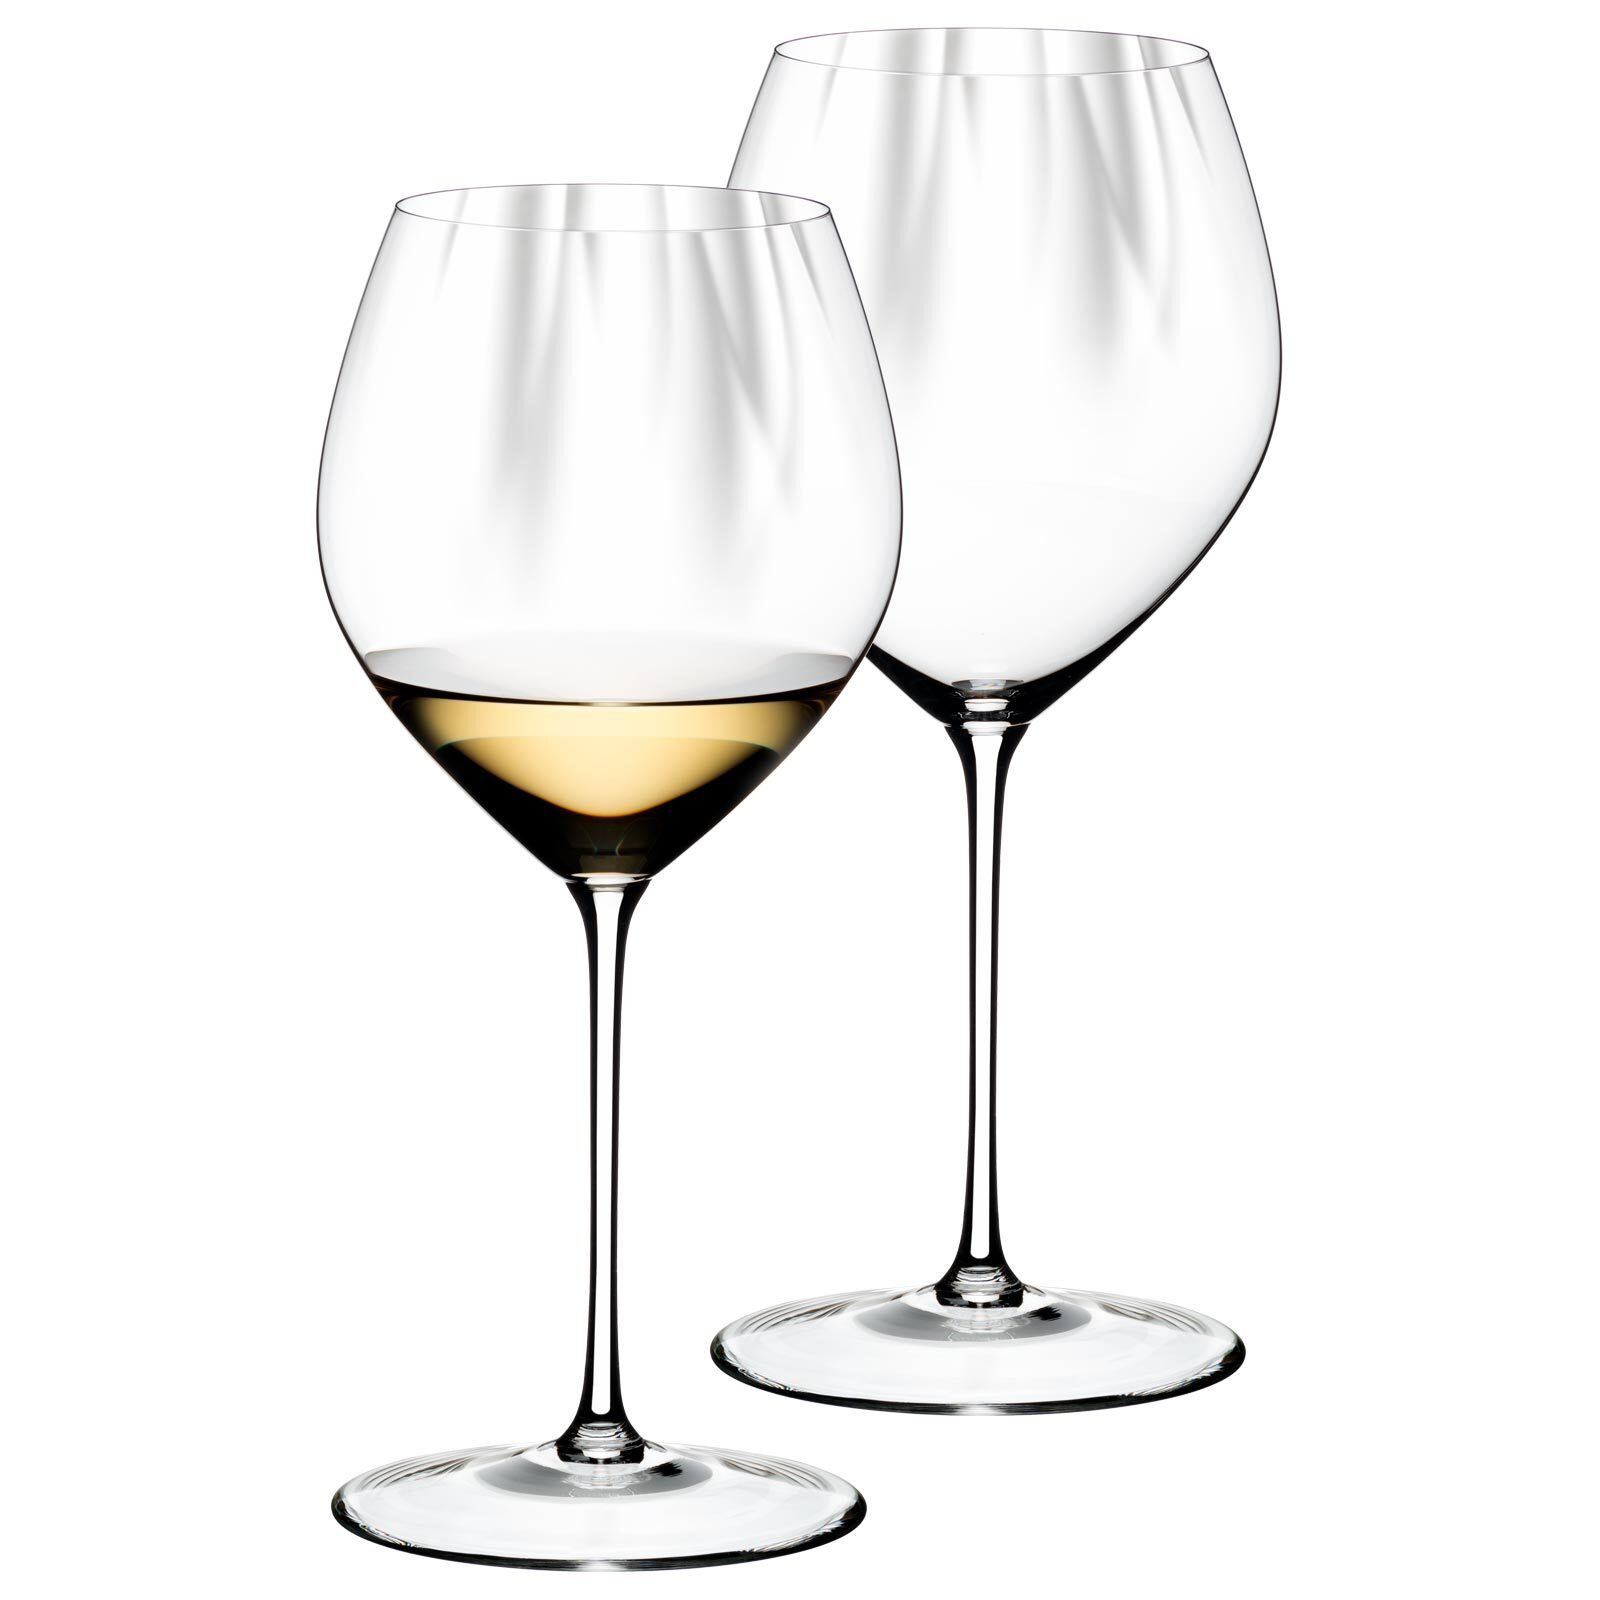 RIEDEL Glas Weißweinglas Performance Chardonnay Gläser 727 ml 2er Set, Glas